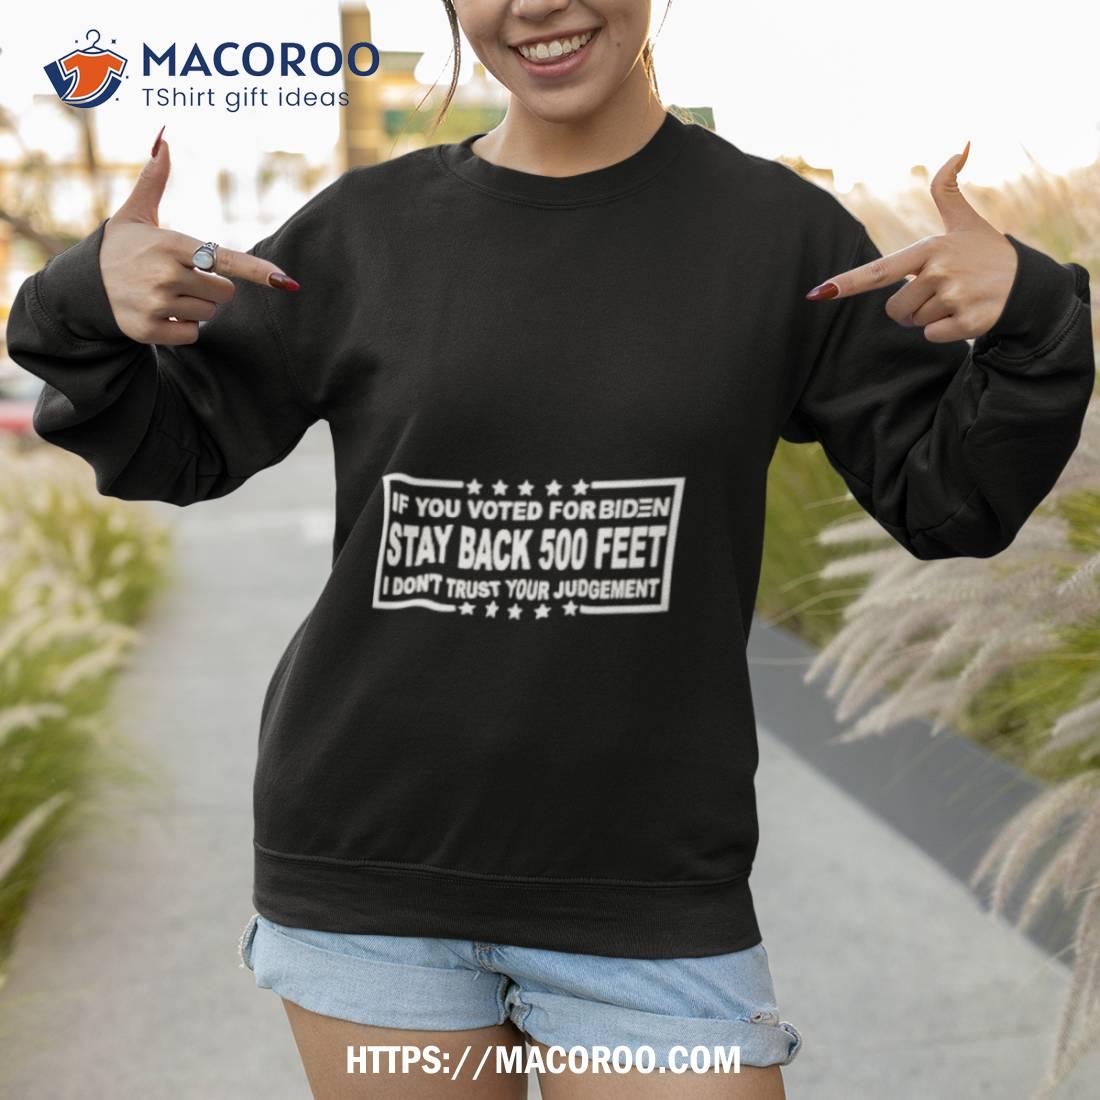 https://images.macoroo.com/wp-content/uploads/2023/10/if-you-voted-for-biden-stay-back-500-feet-shirt-sweatshirt.jpg